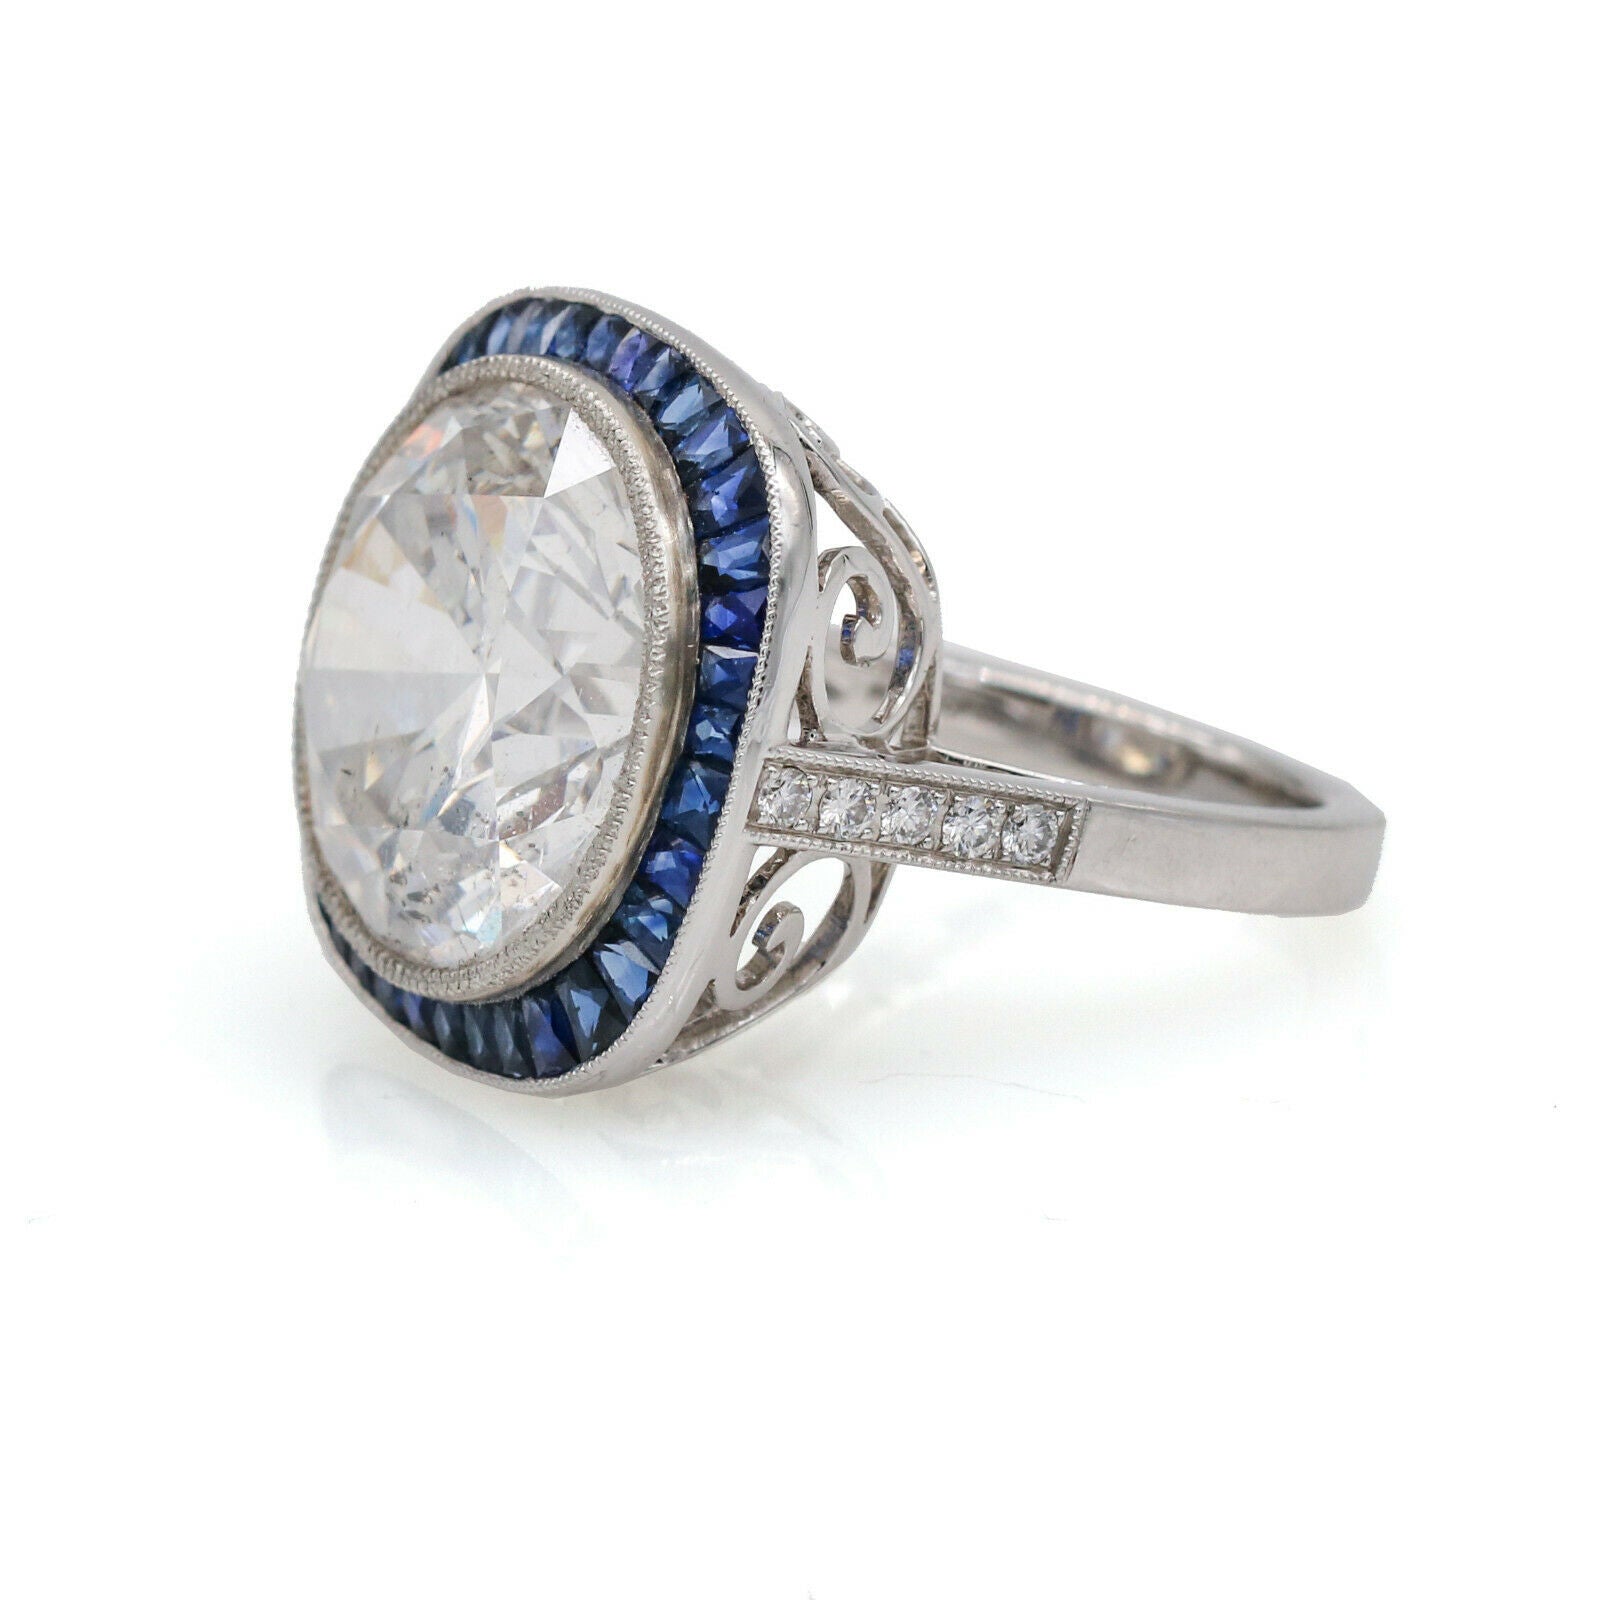 16.6 Ct EGL Certified Round Diamond Blue Sapphire Engagement Ring in Platinum